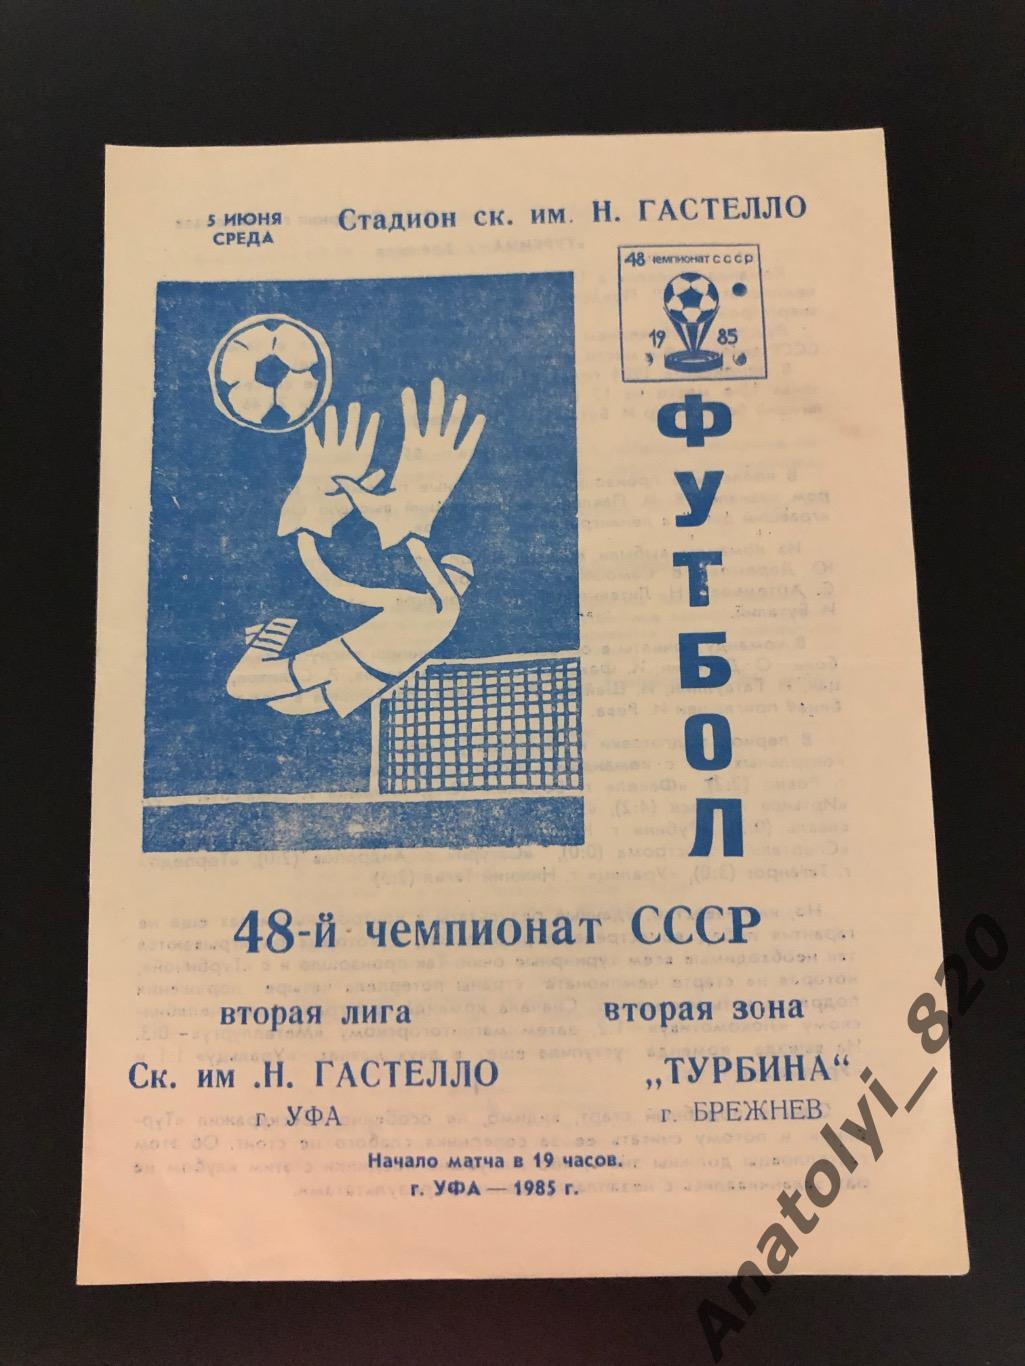 Гастелло Уфа - Турбина Брежнев, 05.06.1985